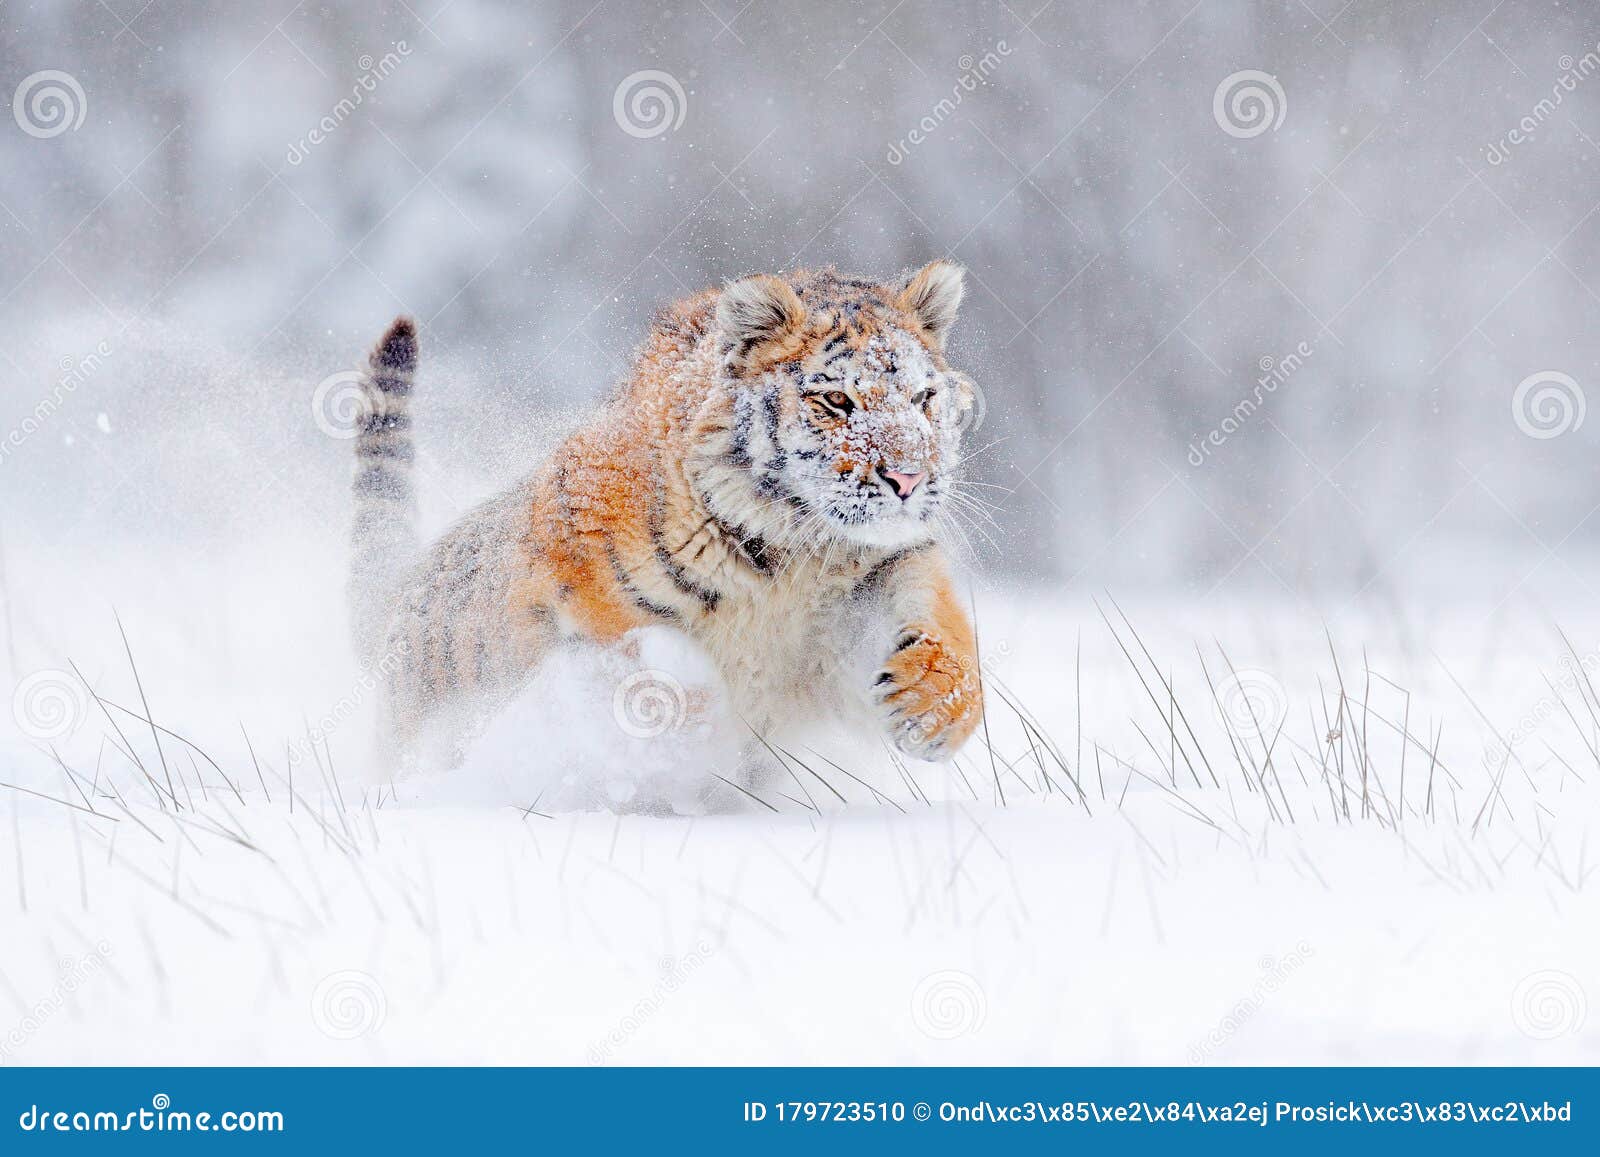 Tiger Snow Run in Wild Winter Nature. Siberian Tiger, Panthera